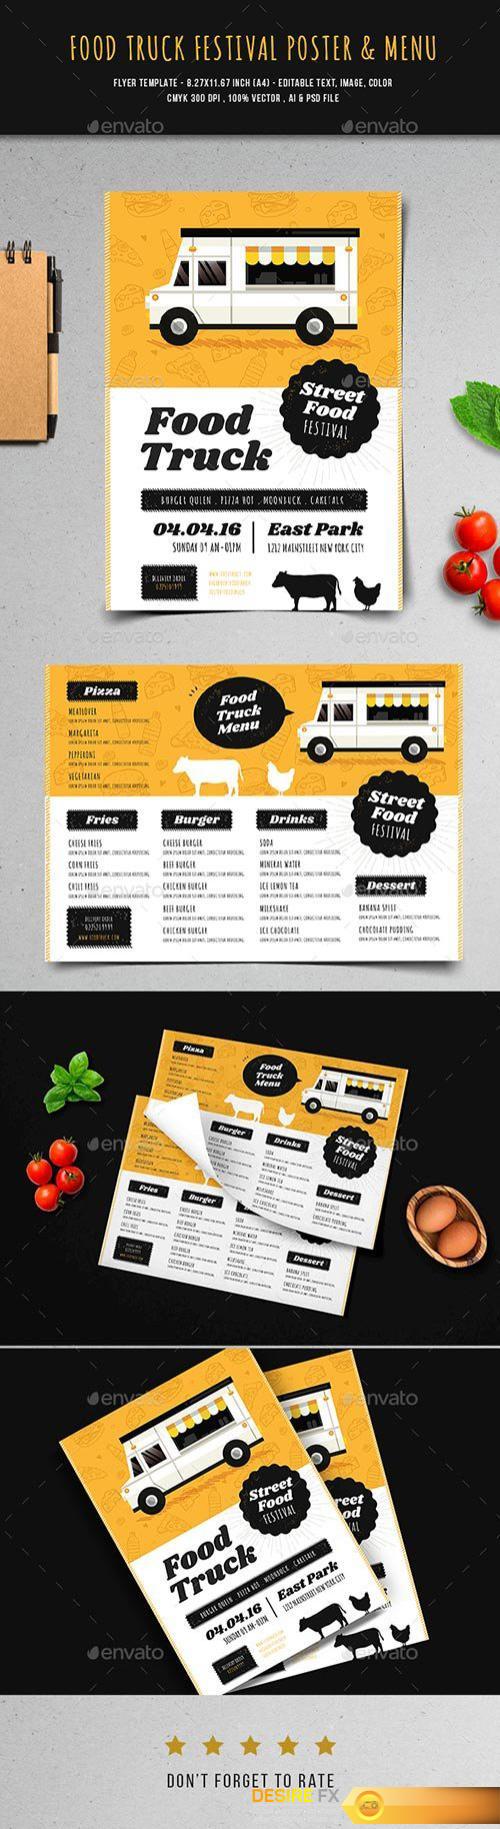 Graphicriver - Food Truck Festival Flyer & Menu 20703783